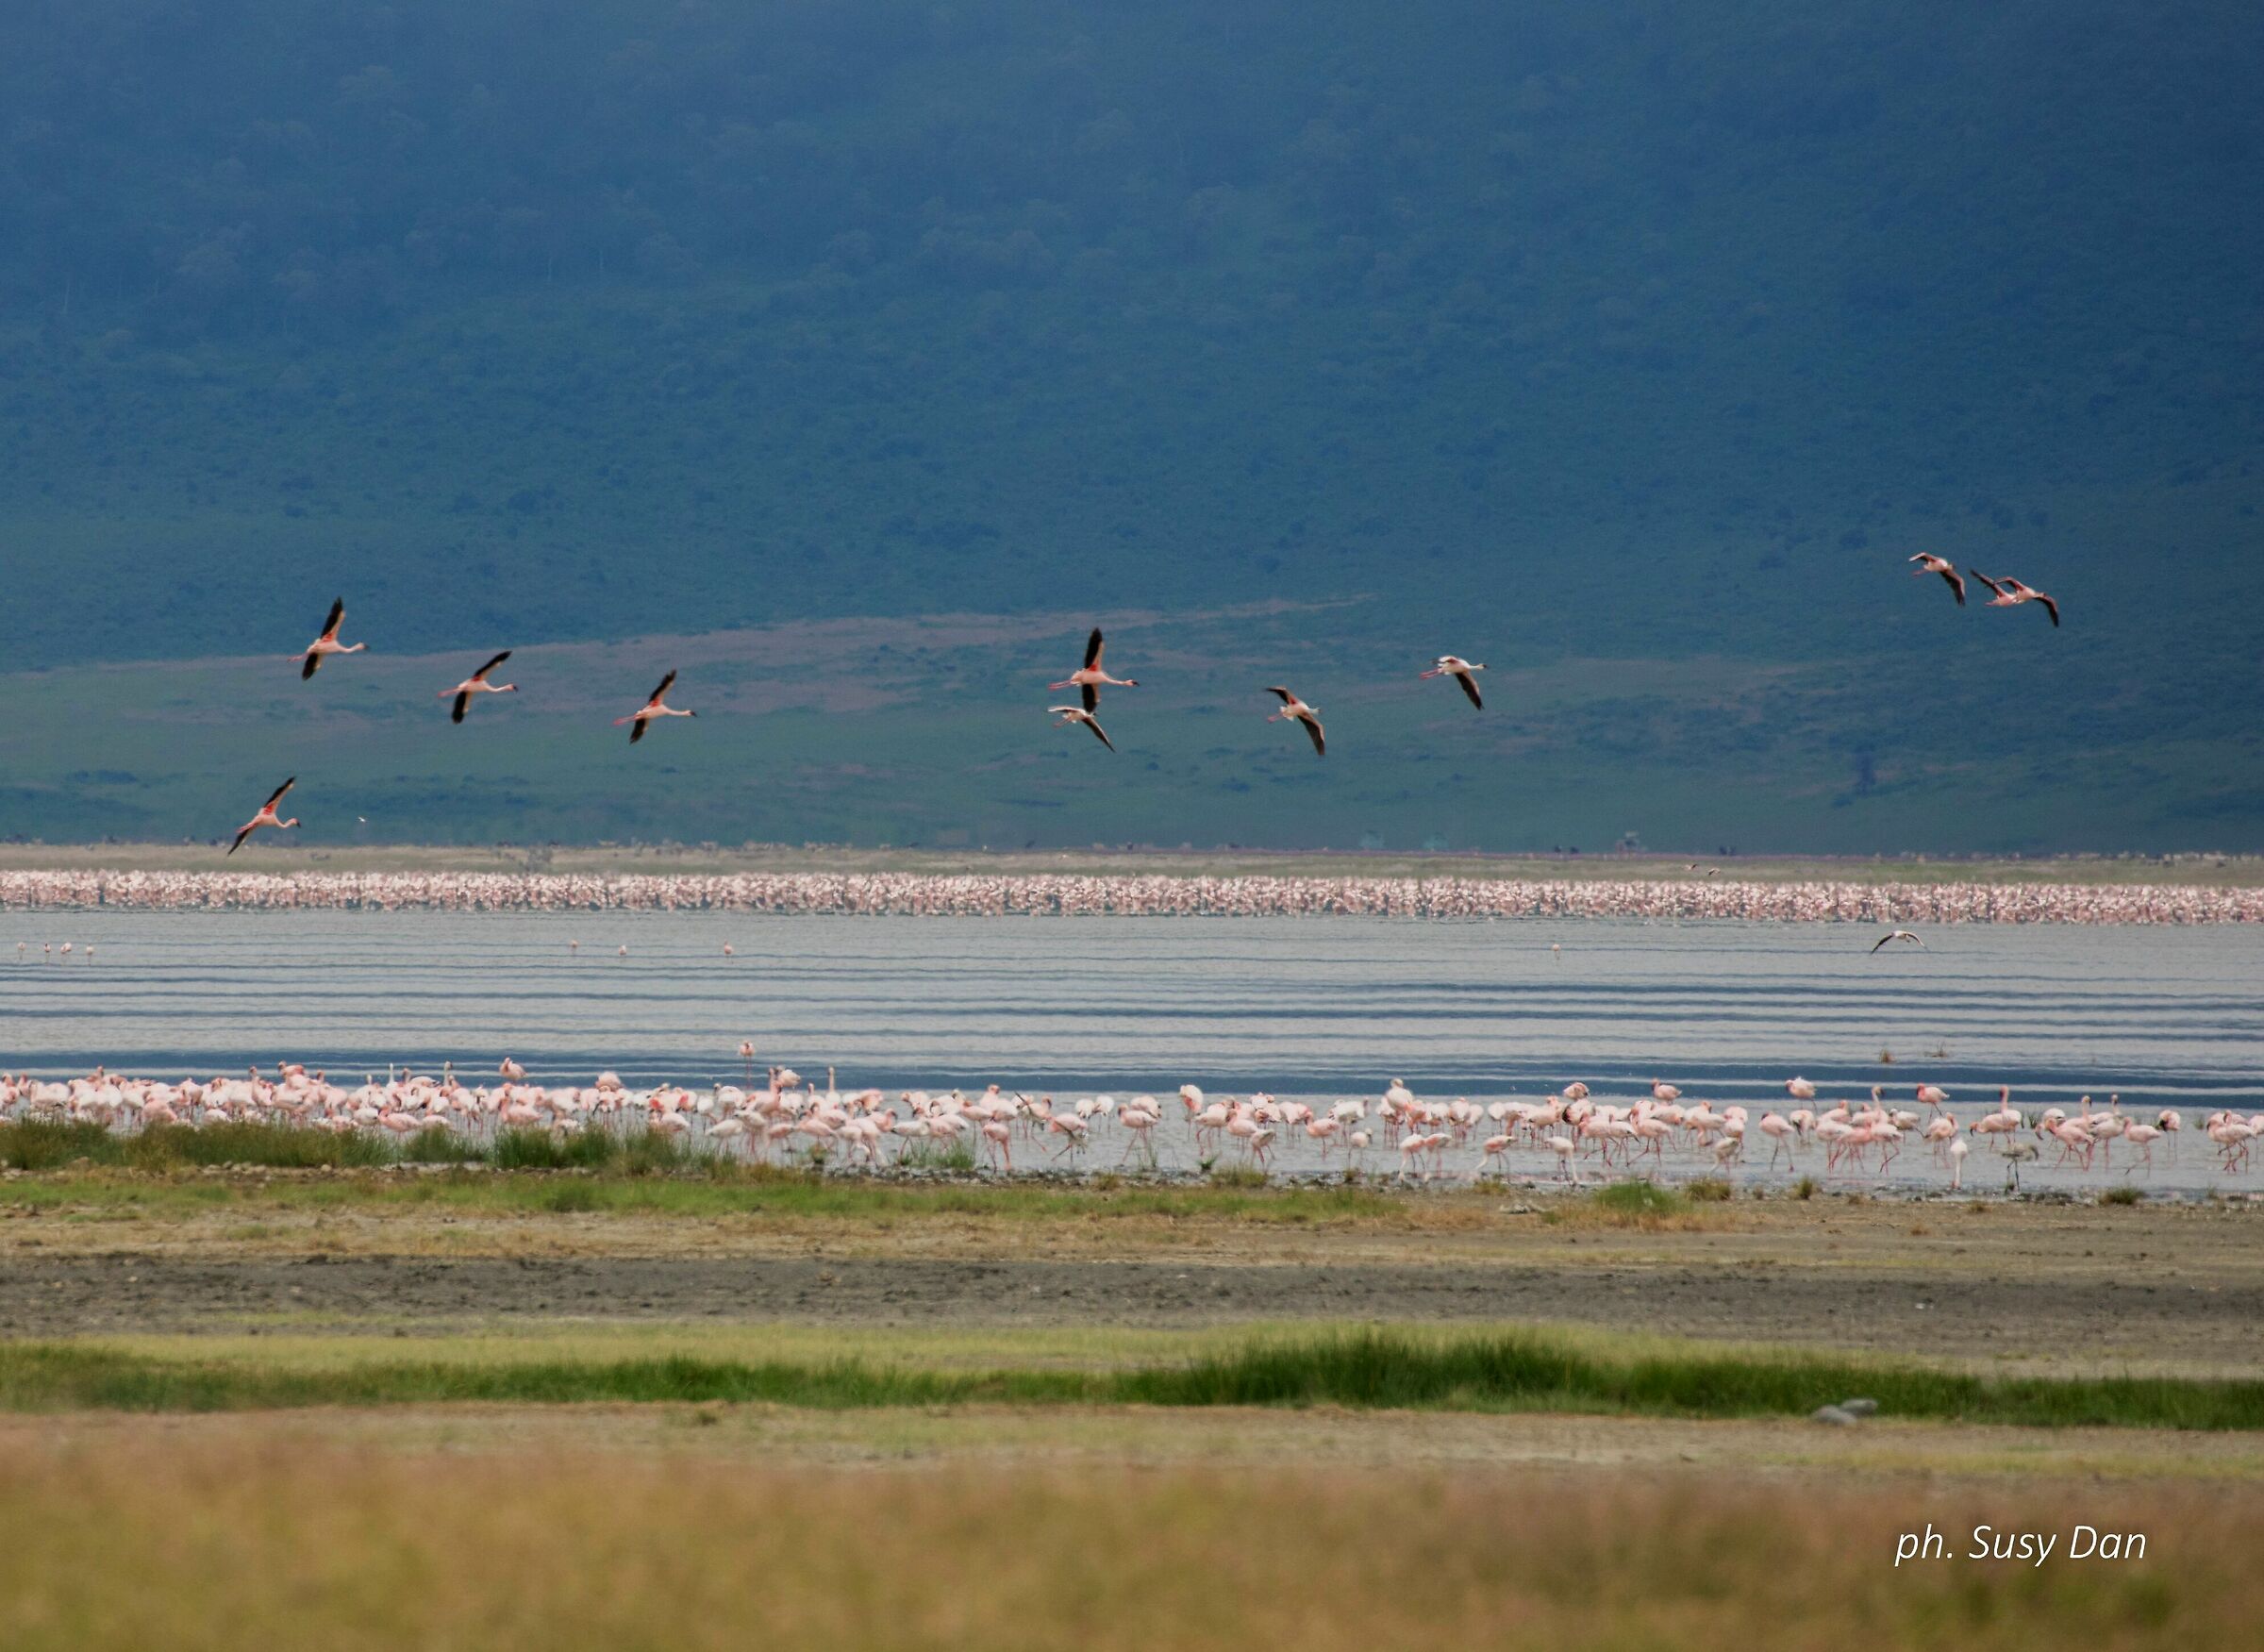 Ngorongoro lake...